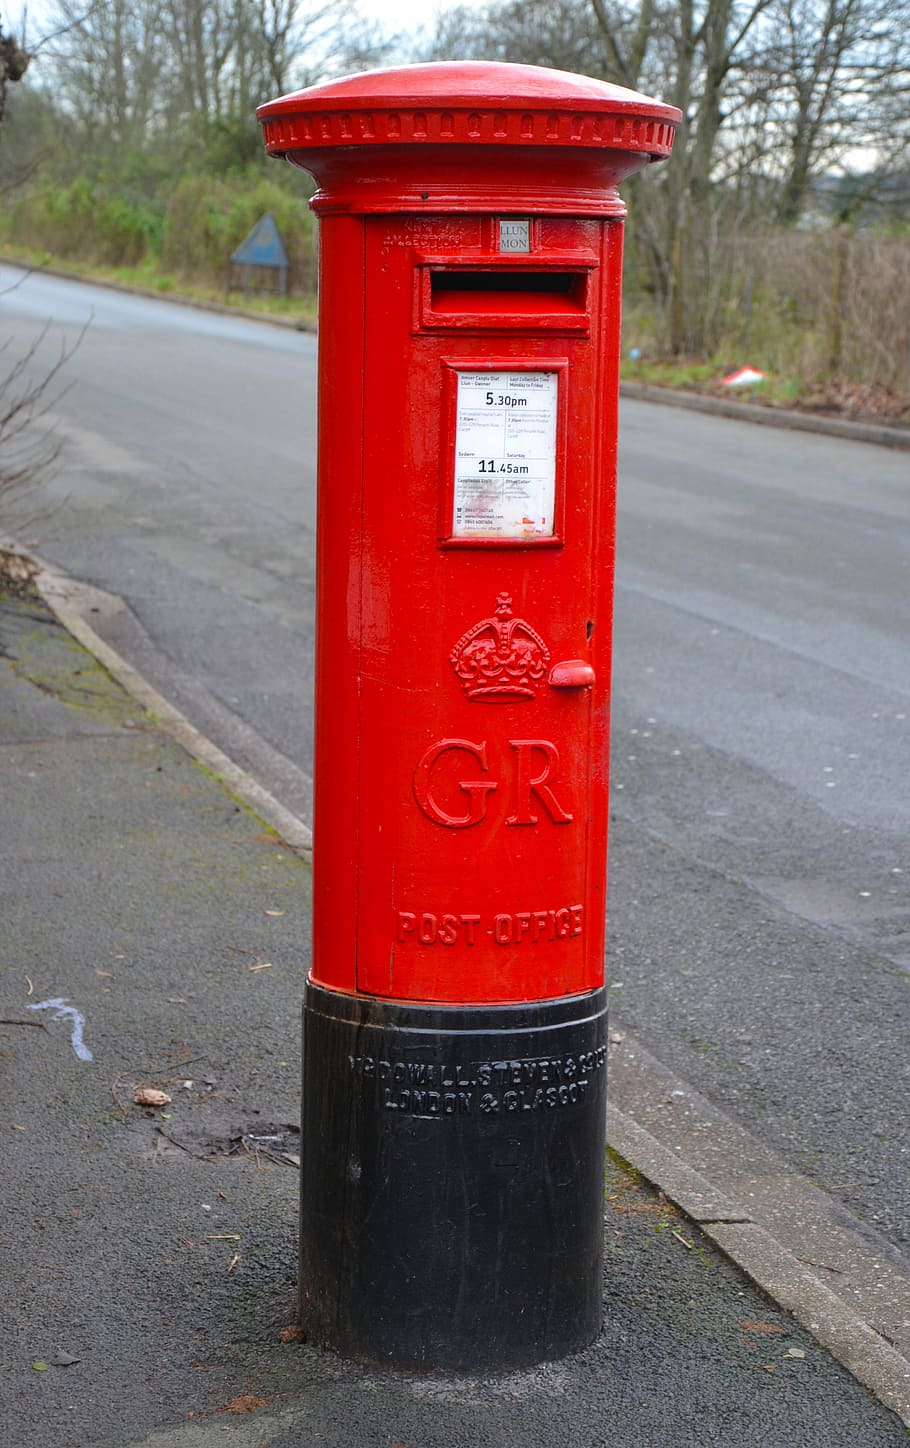 Buzón, correo, rojo, carta, poste, postal, entrega, mensaje, envío, servicio